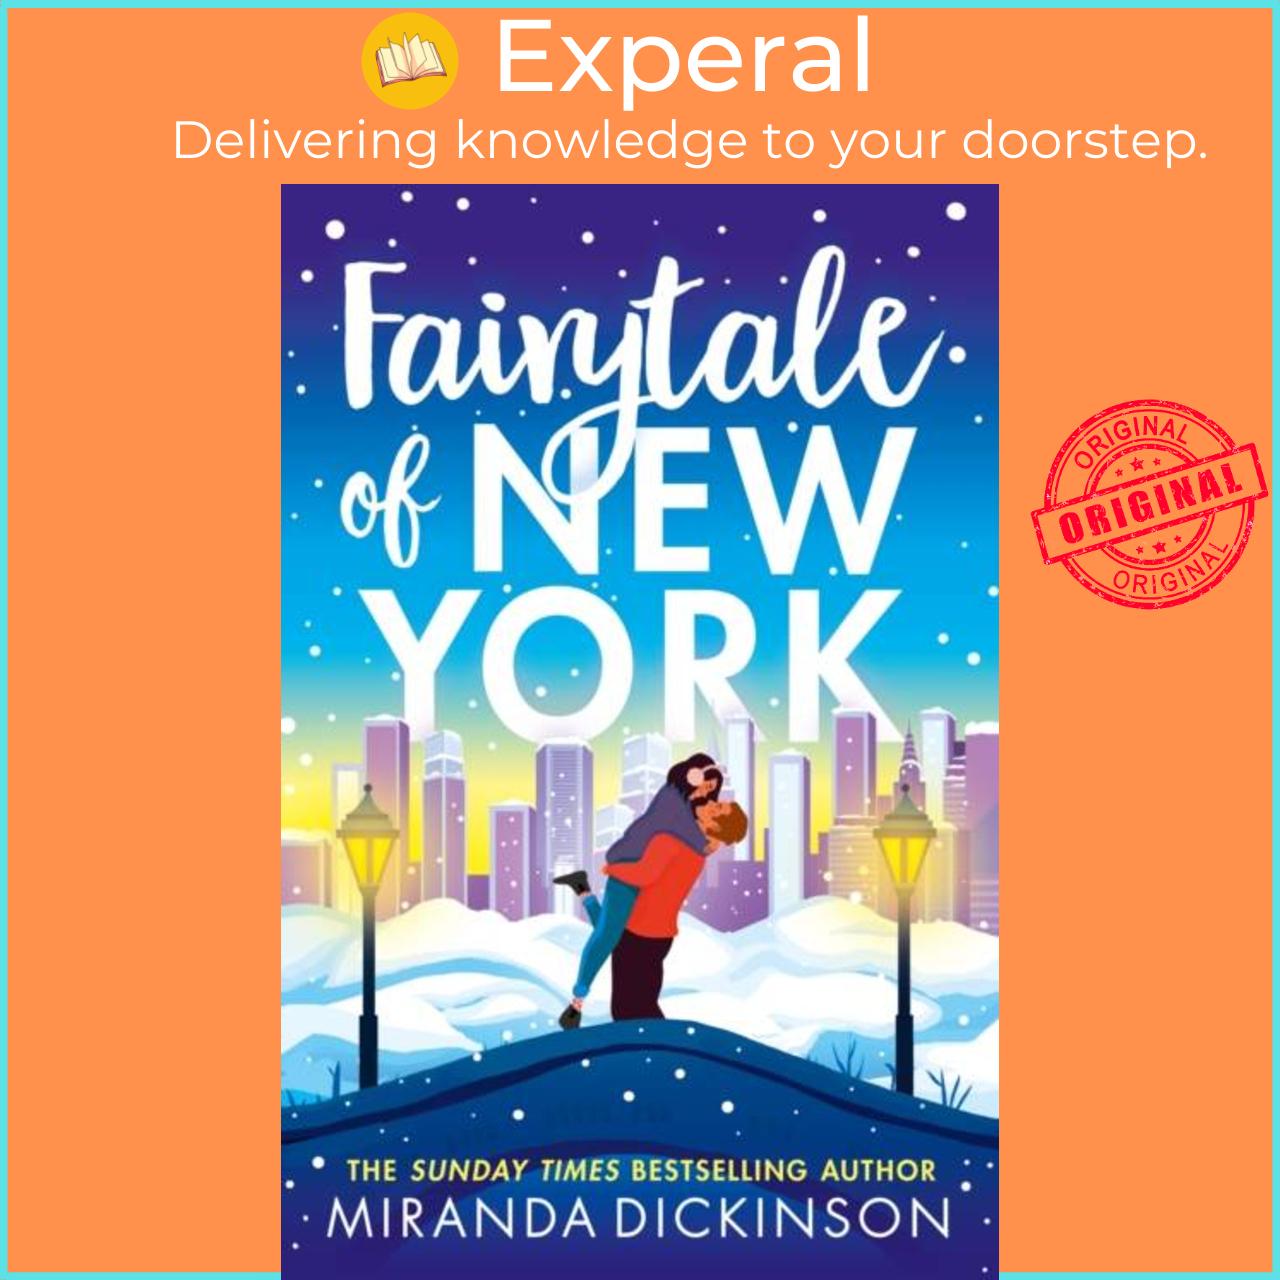 Sách - Fairytale of New York by Miranda Dickinson (UK edition, paperback)